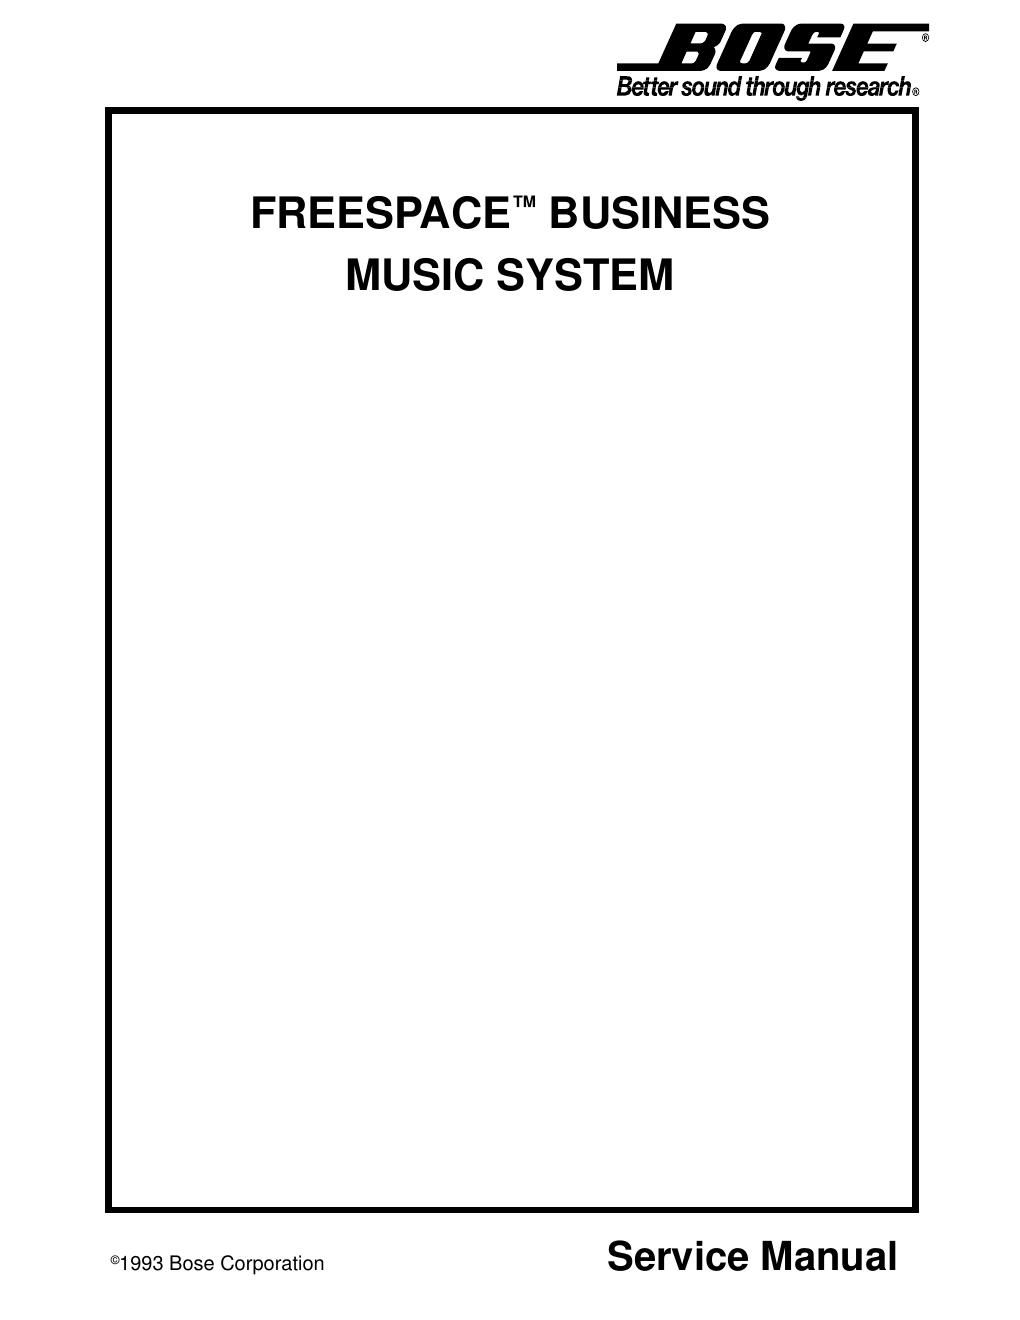 bose freespace business music system